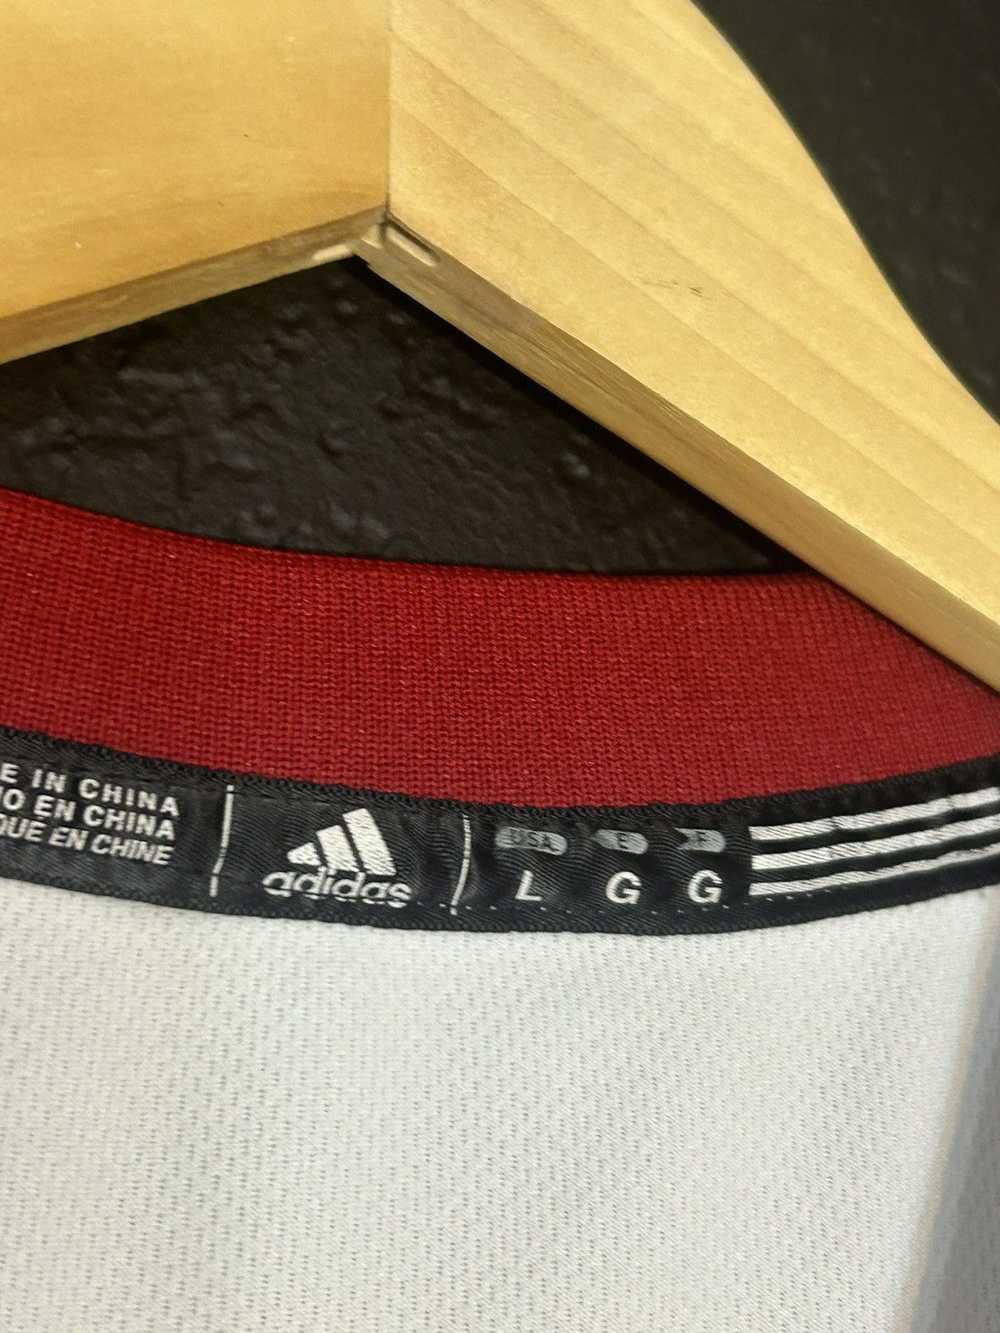 Adidas × NBA Miami Heat Dwyane Wade #3 Jersey - image 4